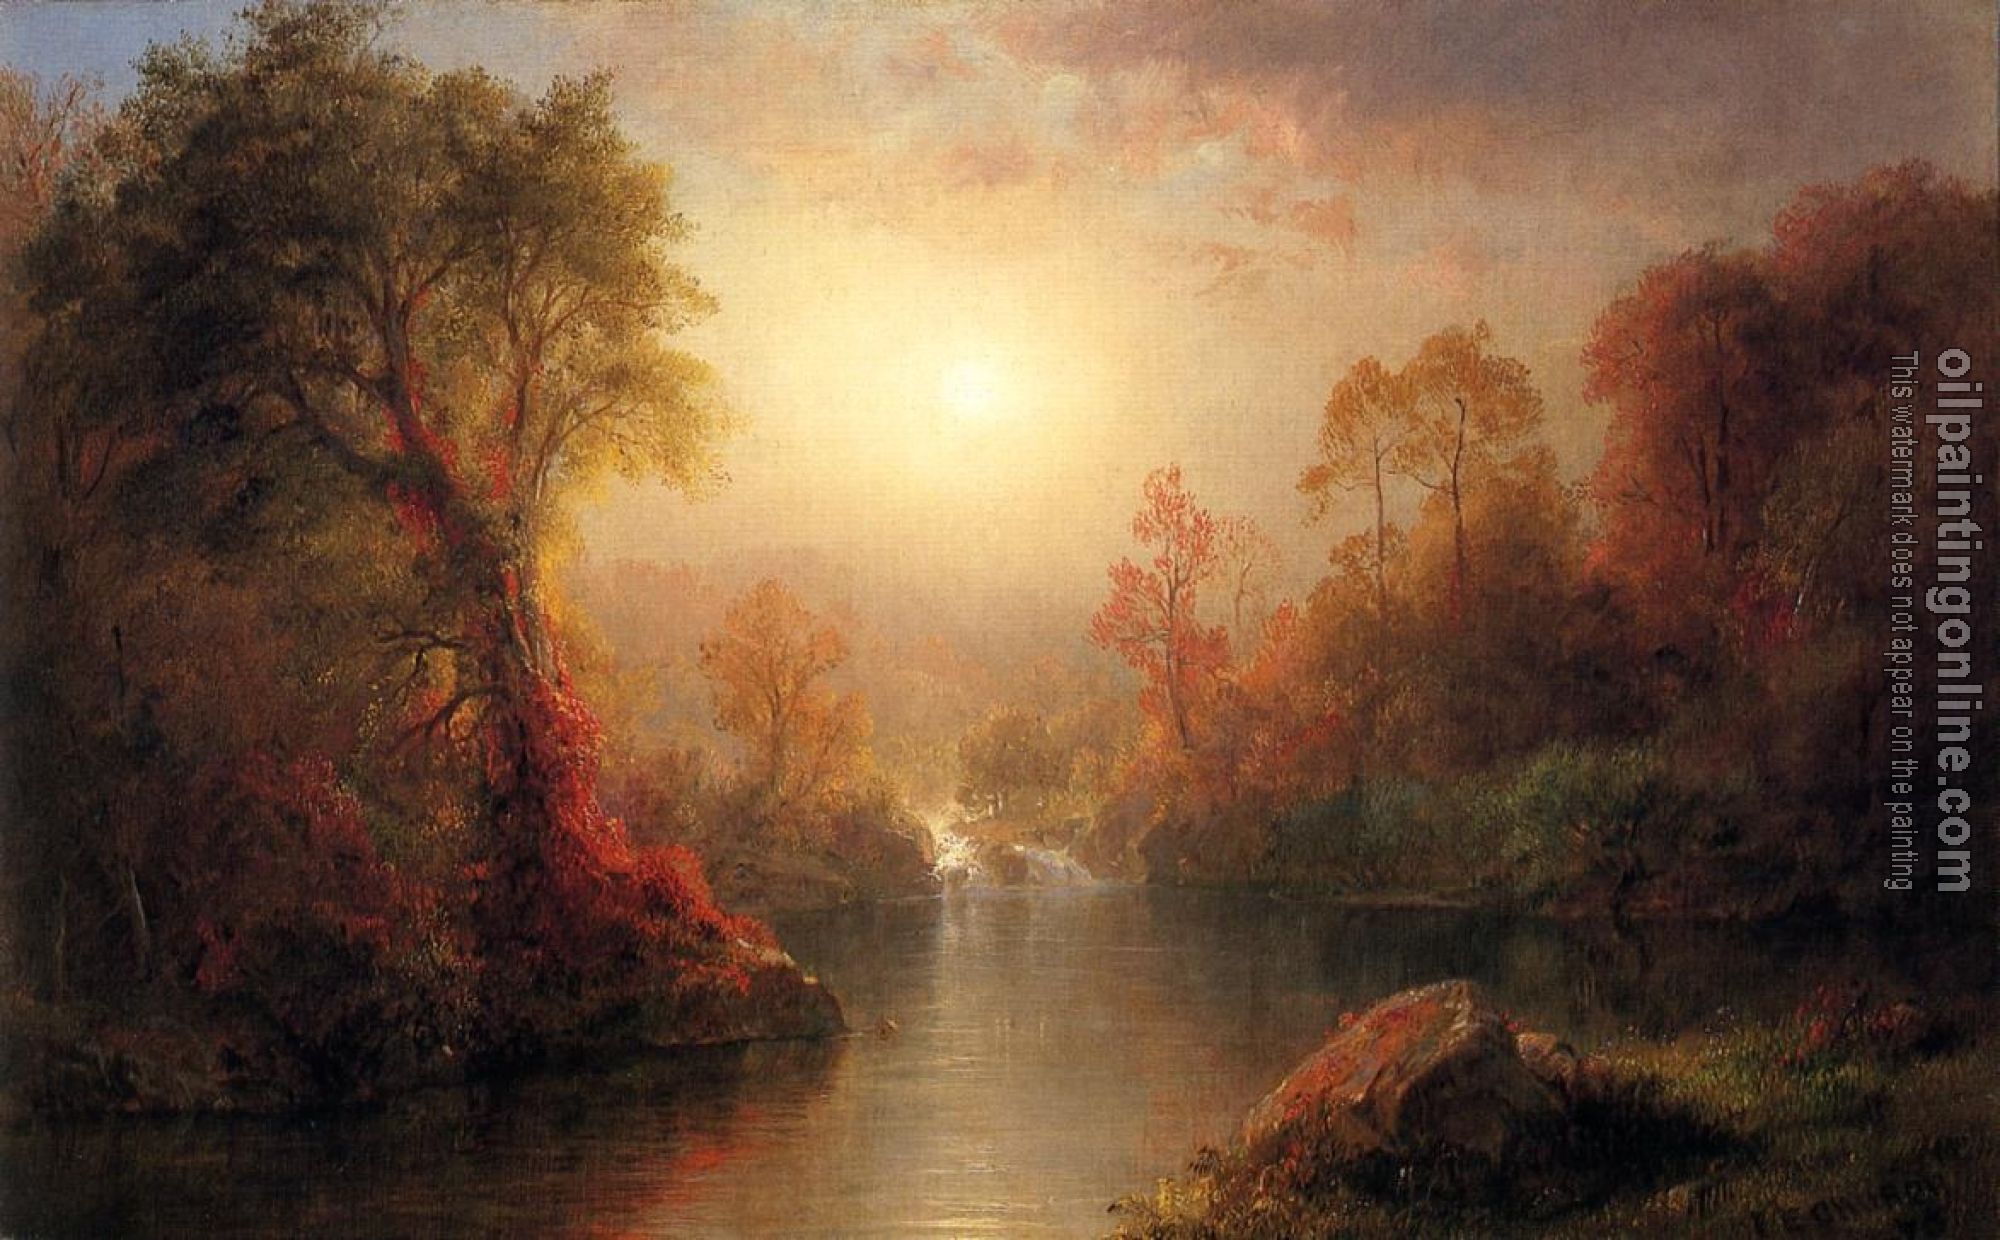 Frederic Edwin Church - Autumn